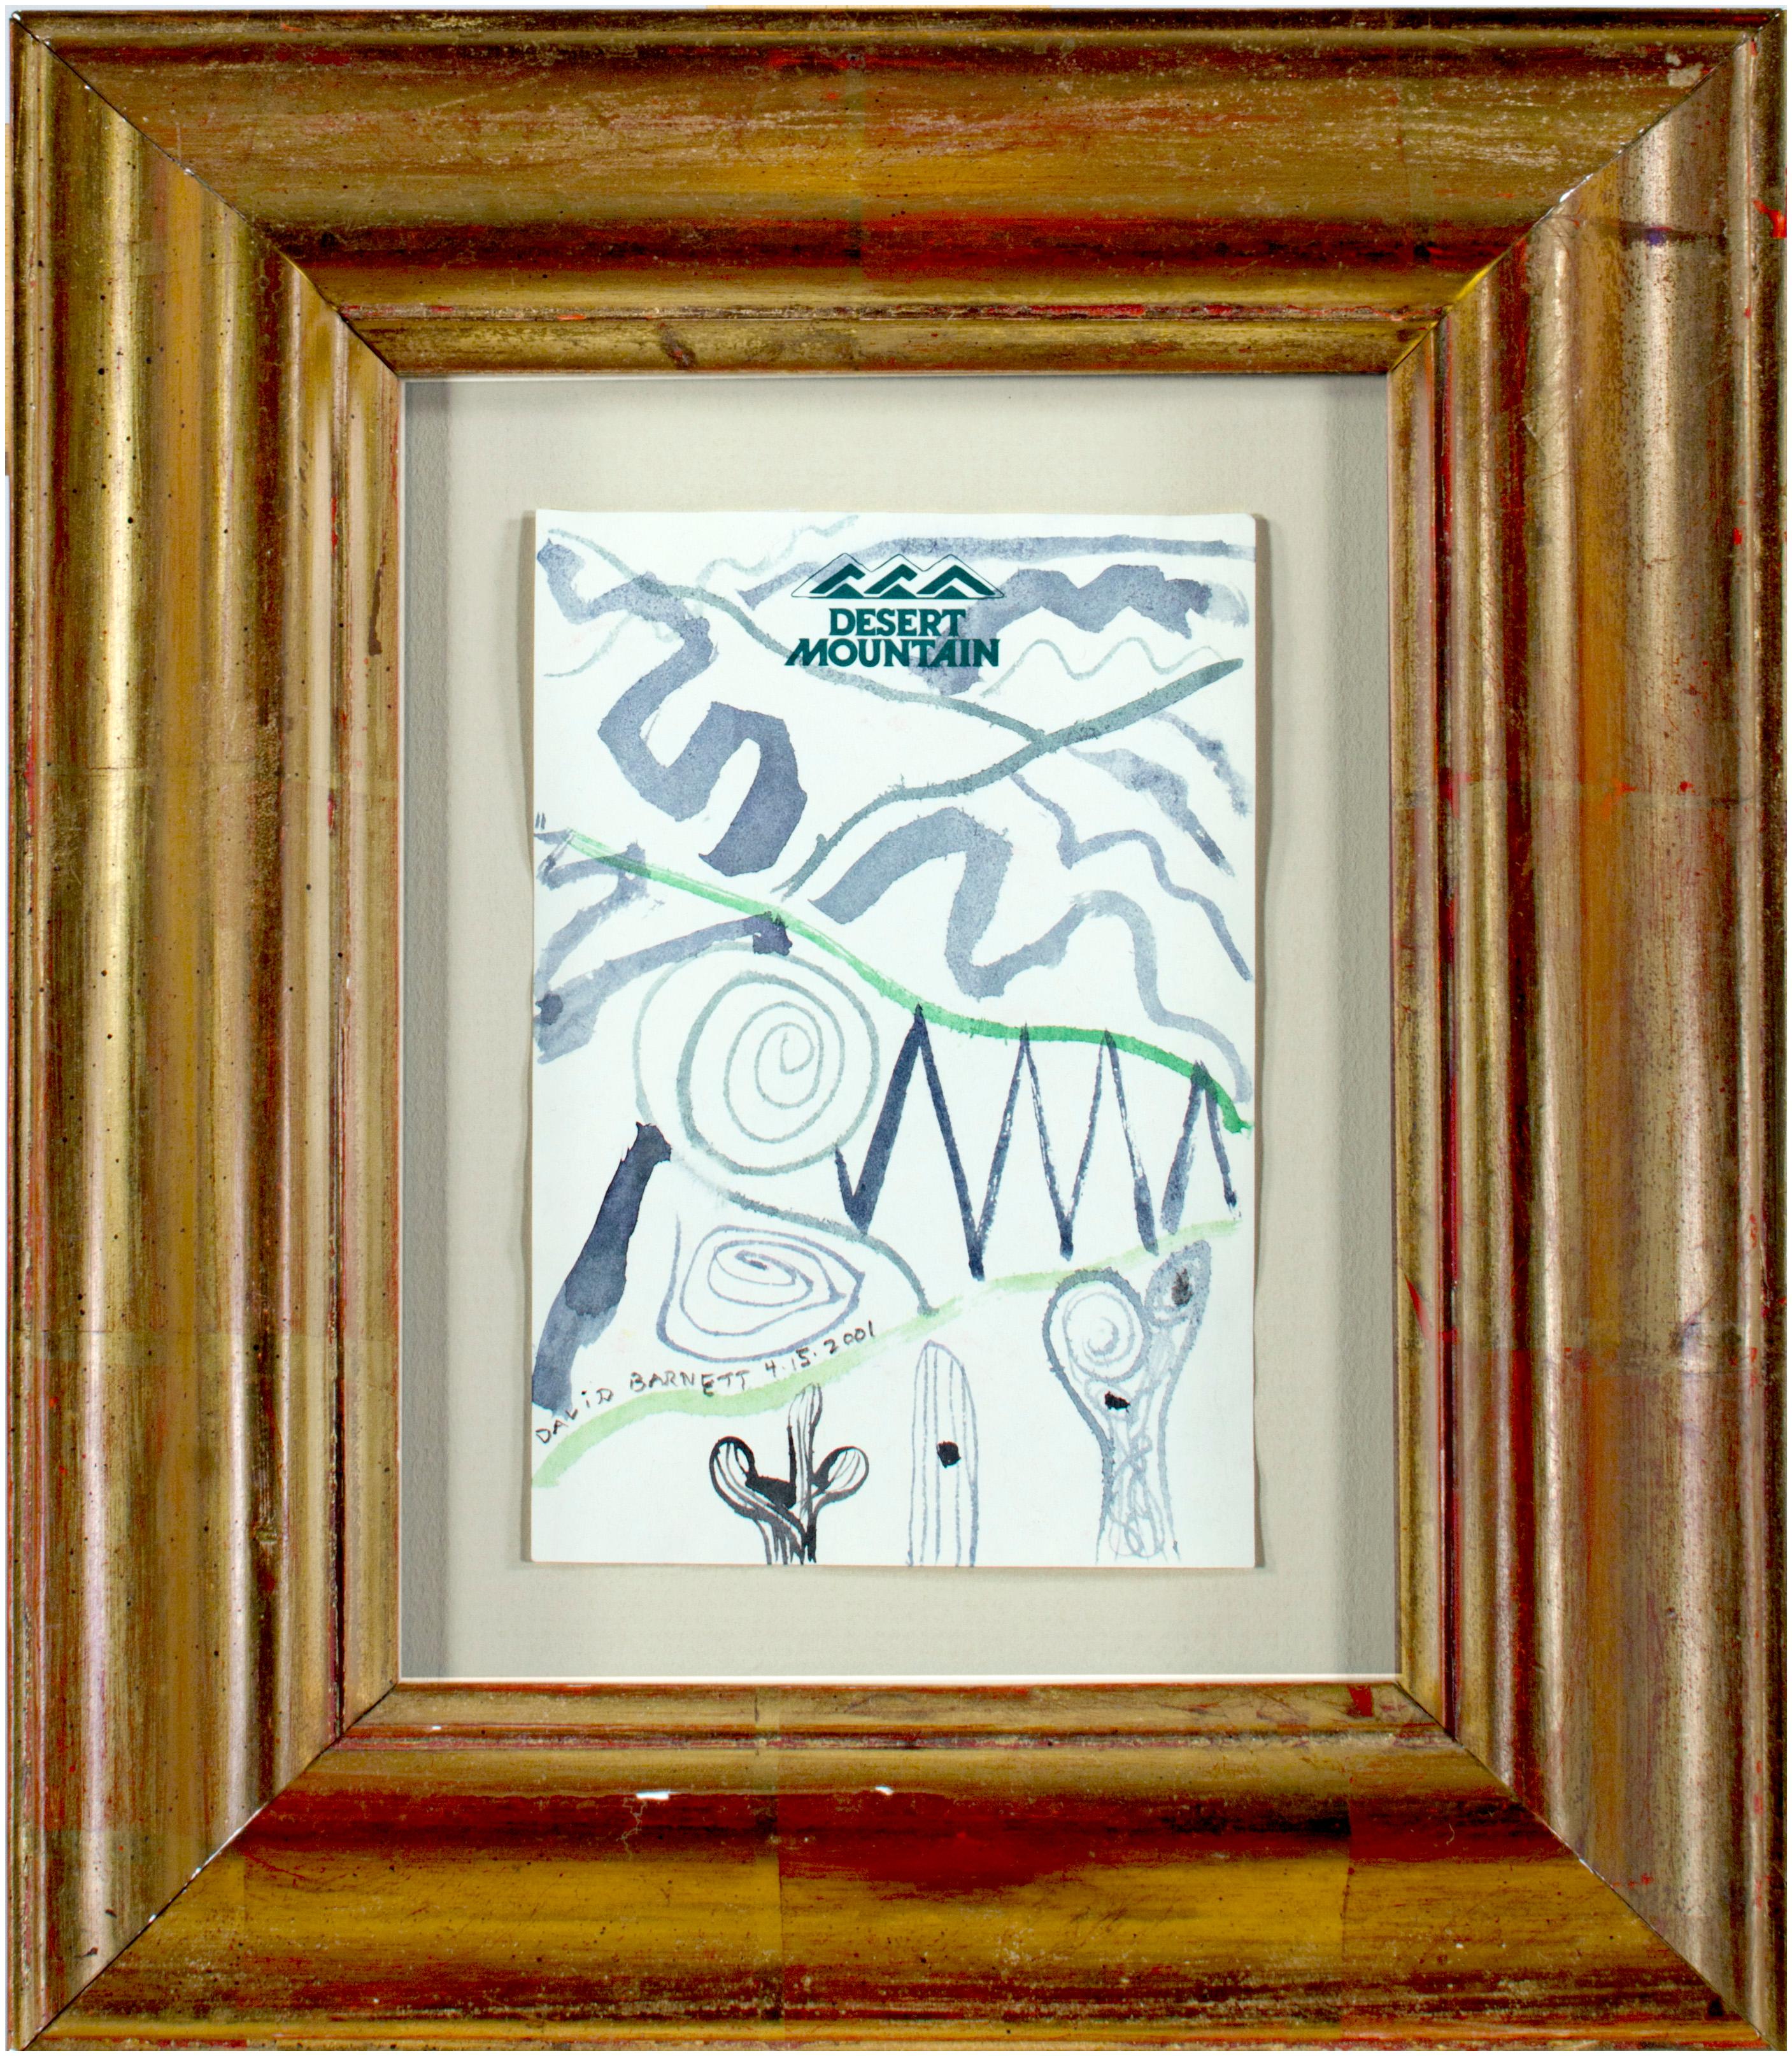 David Barnett Landscape Art - 'Desert Mountain Paths' original signed watercolor painting on notepad paper 